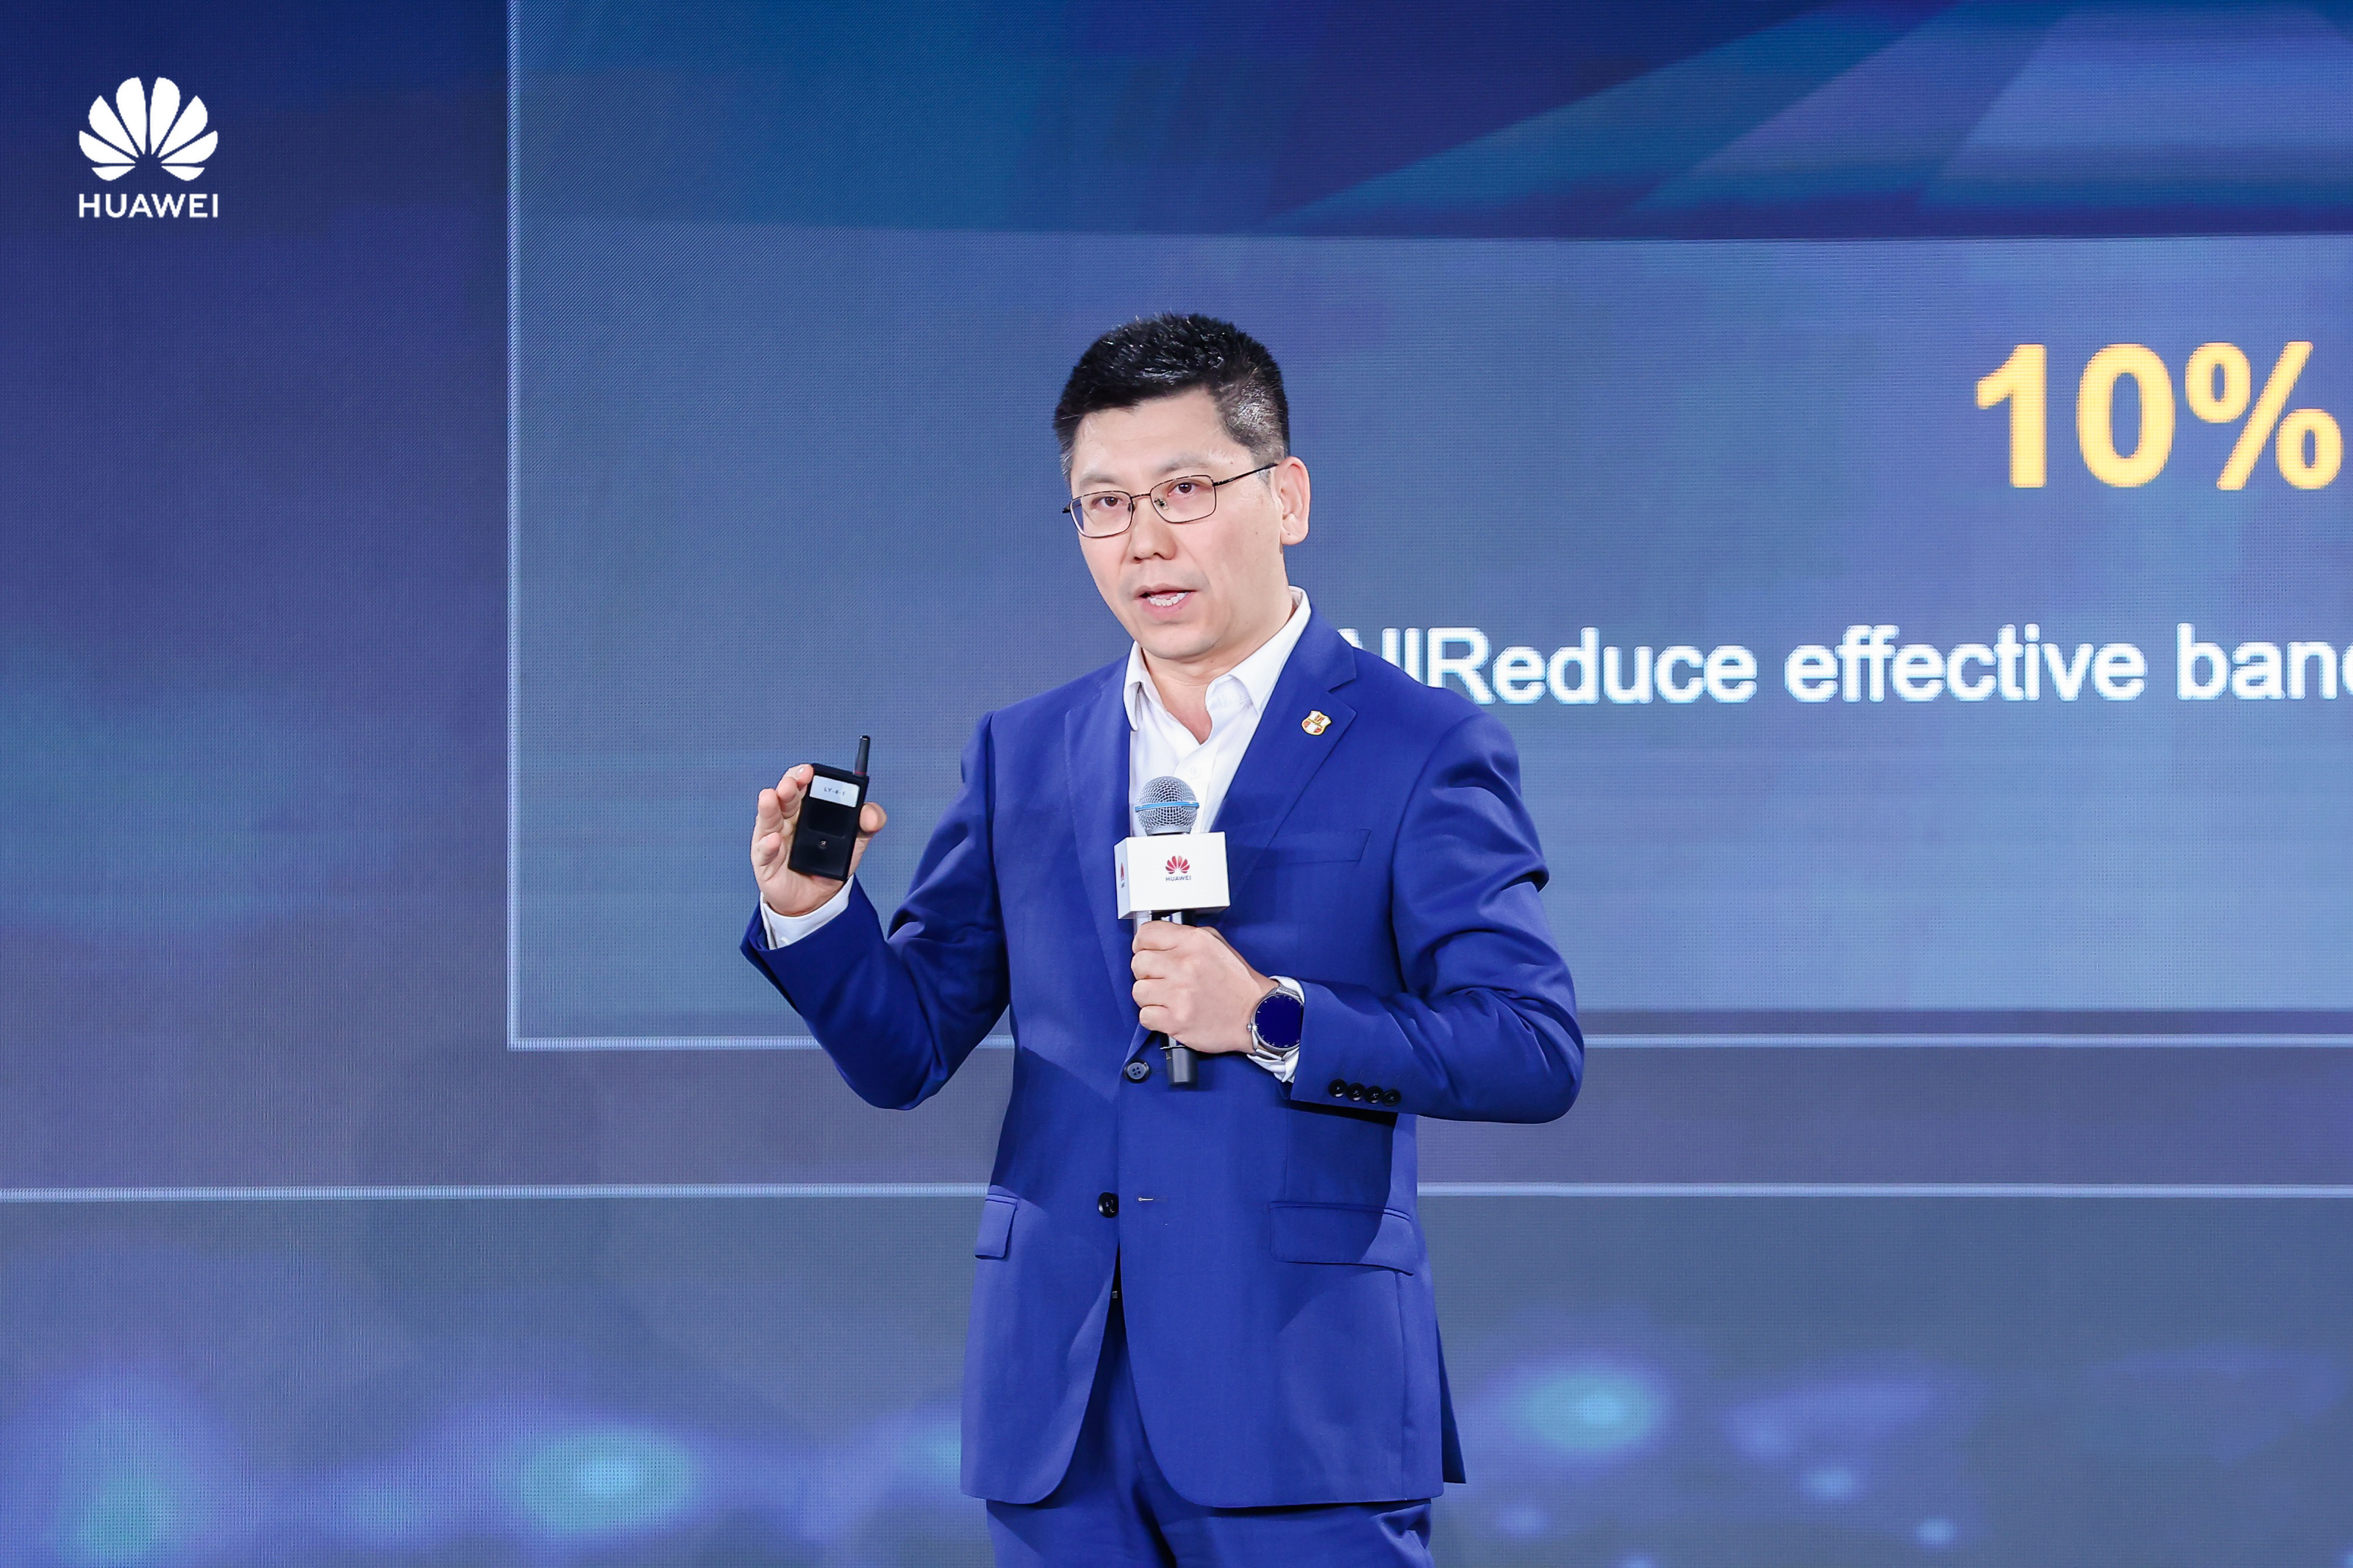 Steven Zhao, Vice President, Huawei Data Communication Product Line